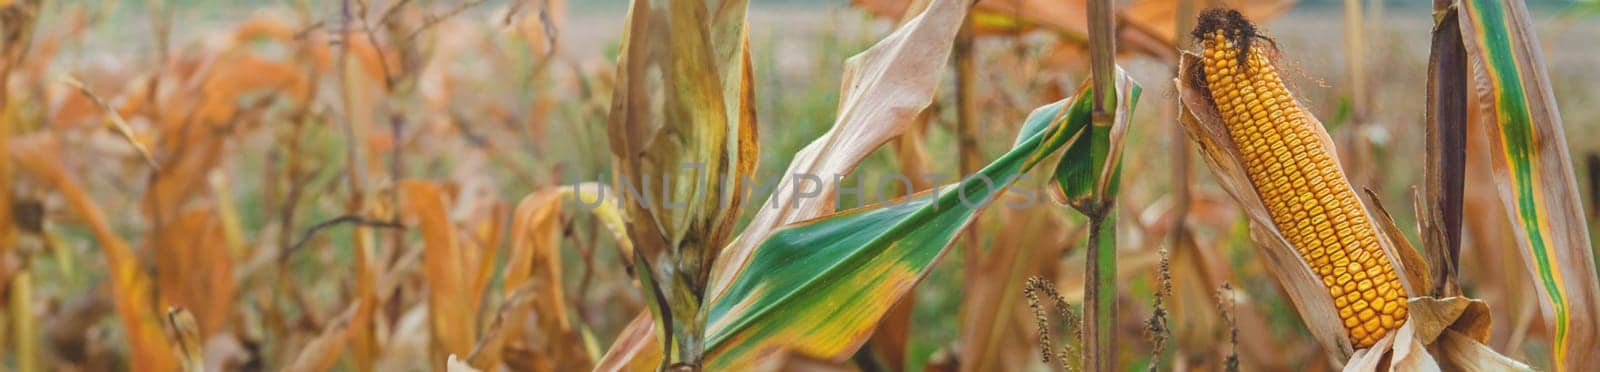 Corn harvest on the field. Selective focus. by yanadjana